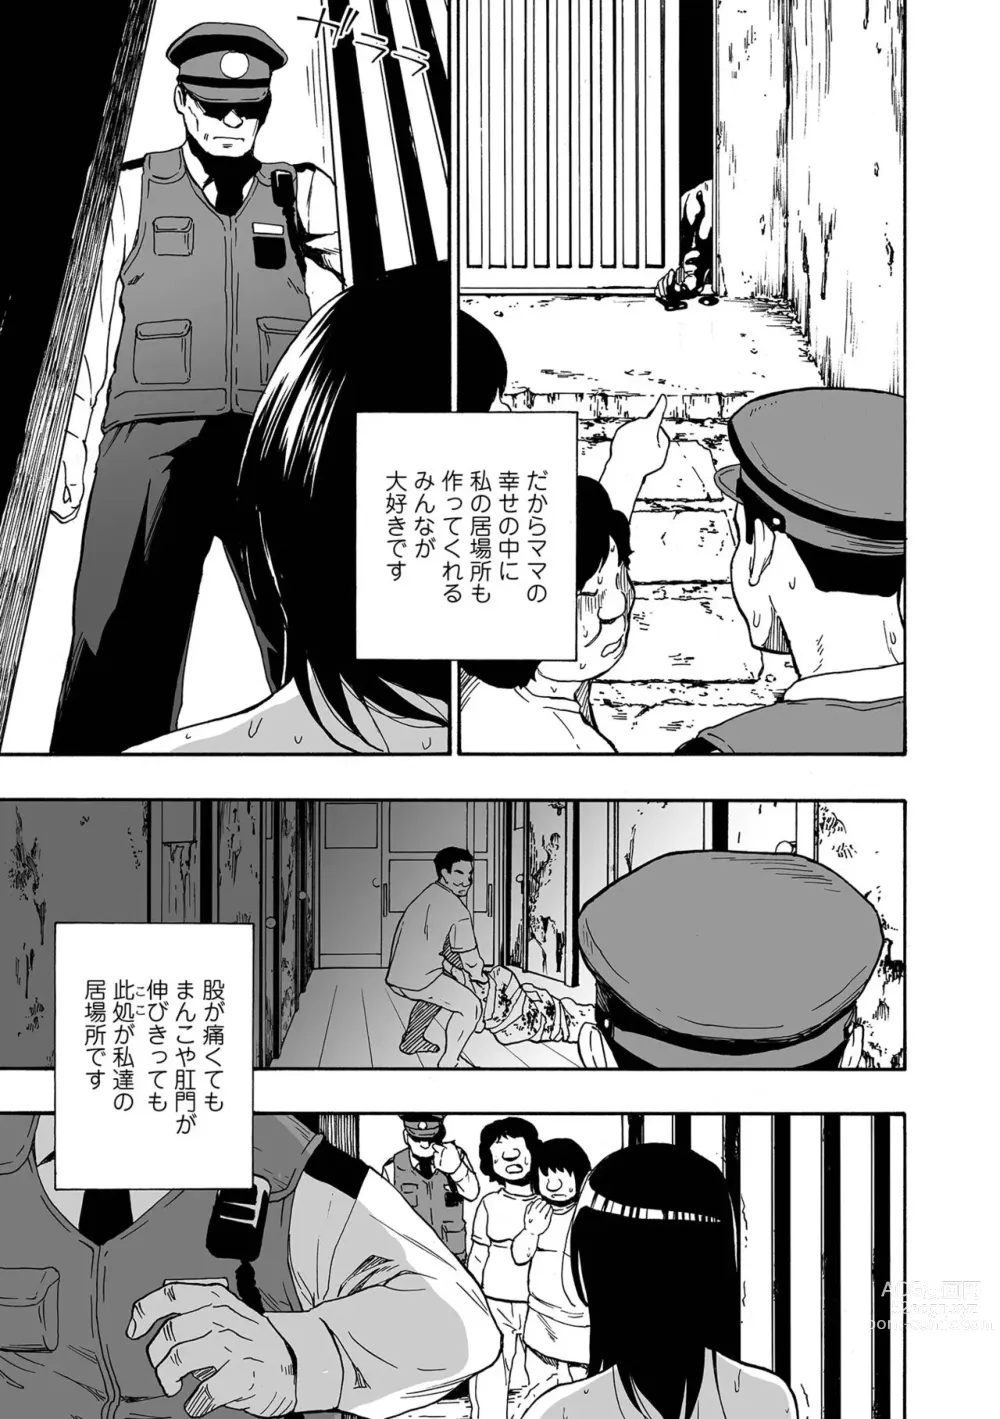 Page 193 of manga Garbage Dump Ch. 1-9